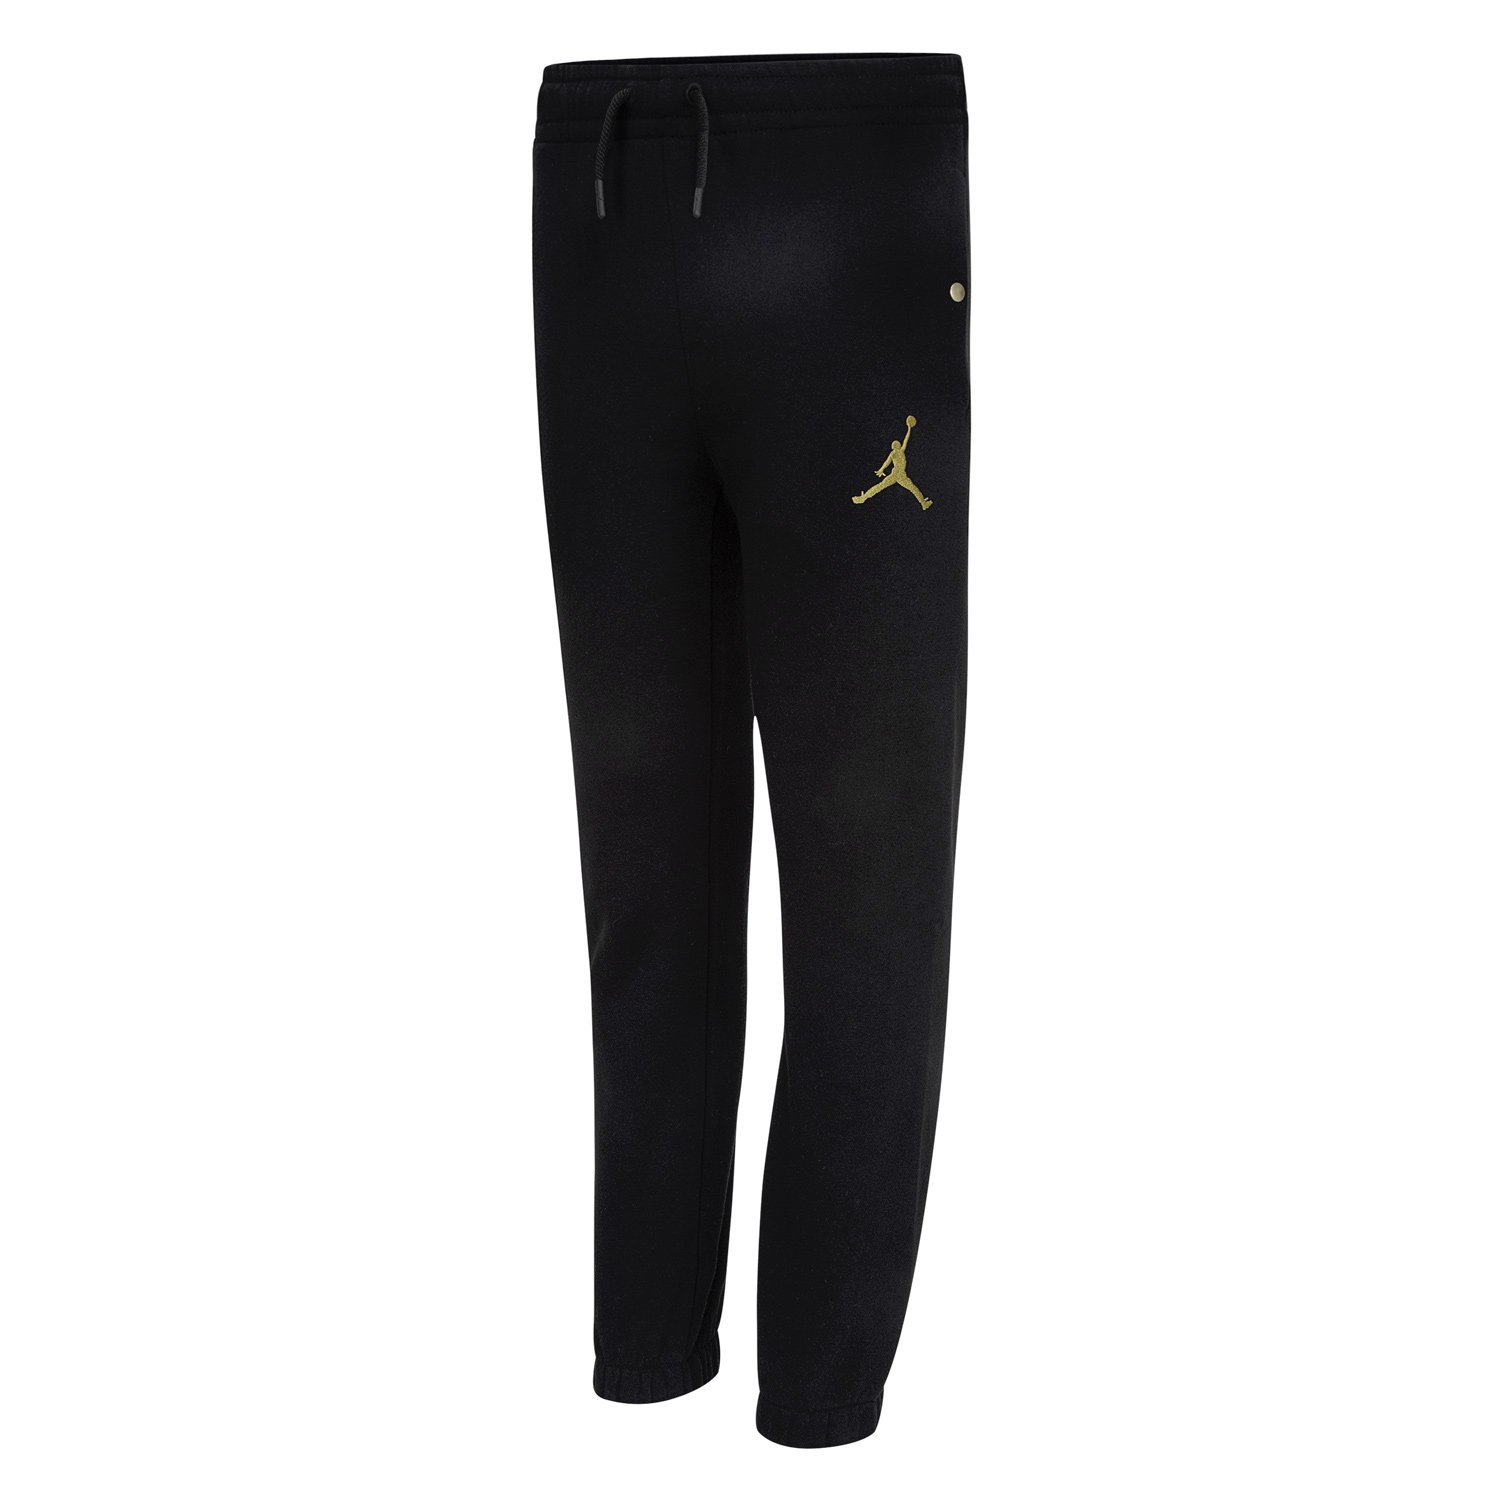 Jordan Take Flight B&G Fleece Pant Black - Kids - Pants Jordan - Black - 95C801-023 - Size: S